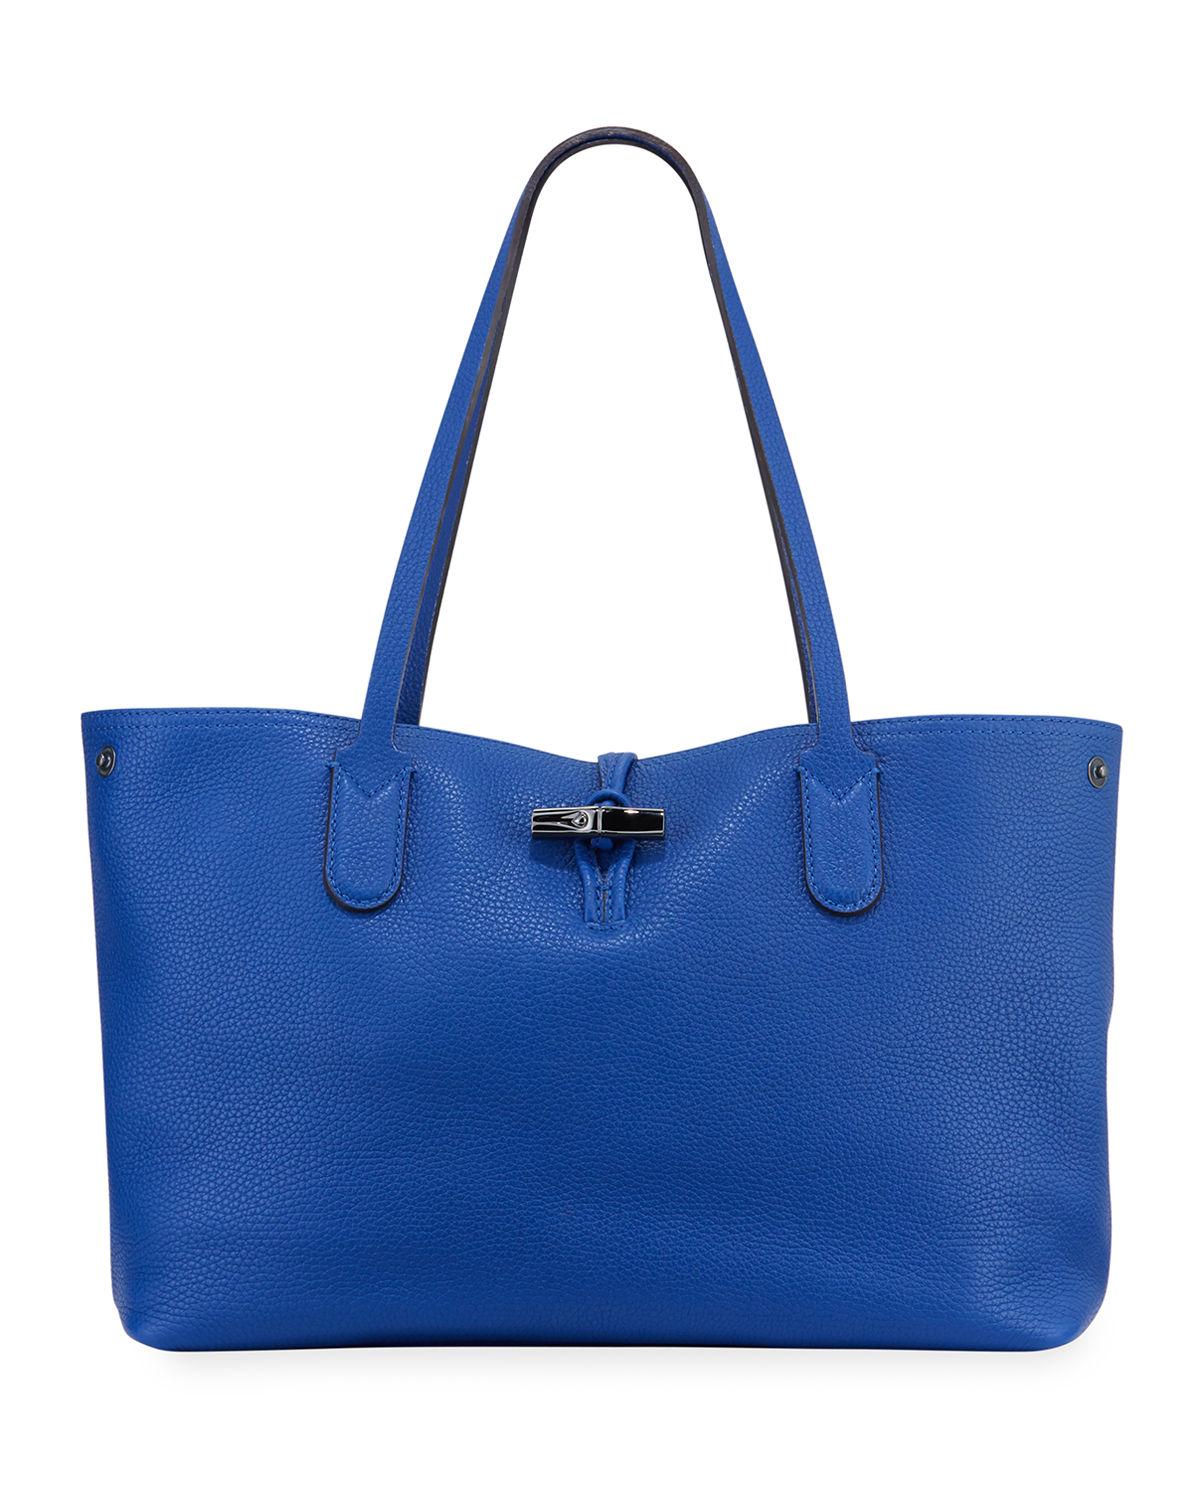 Longchamp Roseau Essential Medium Leather Shoulder Tote Bag in Blue - Lyst